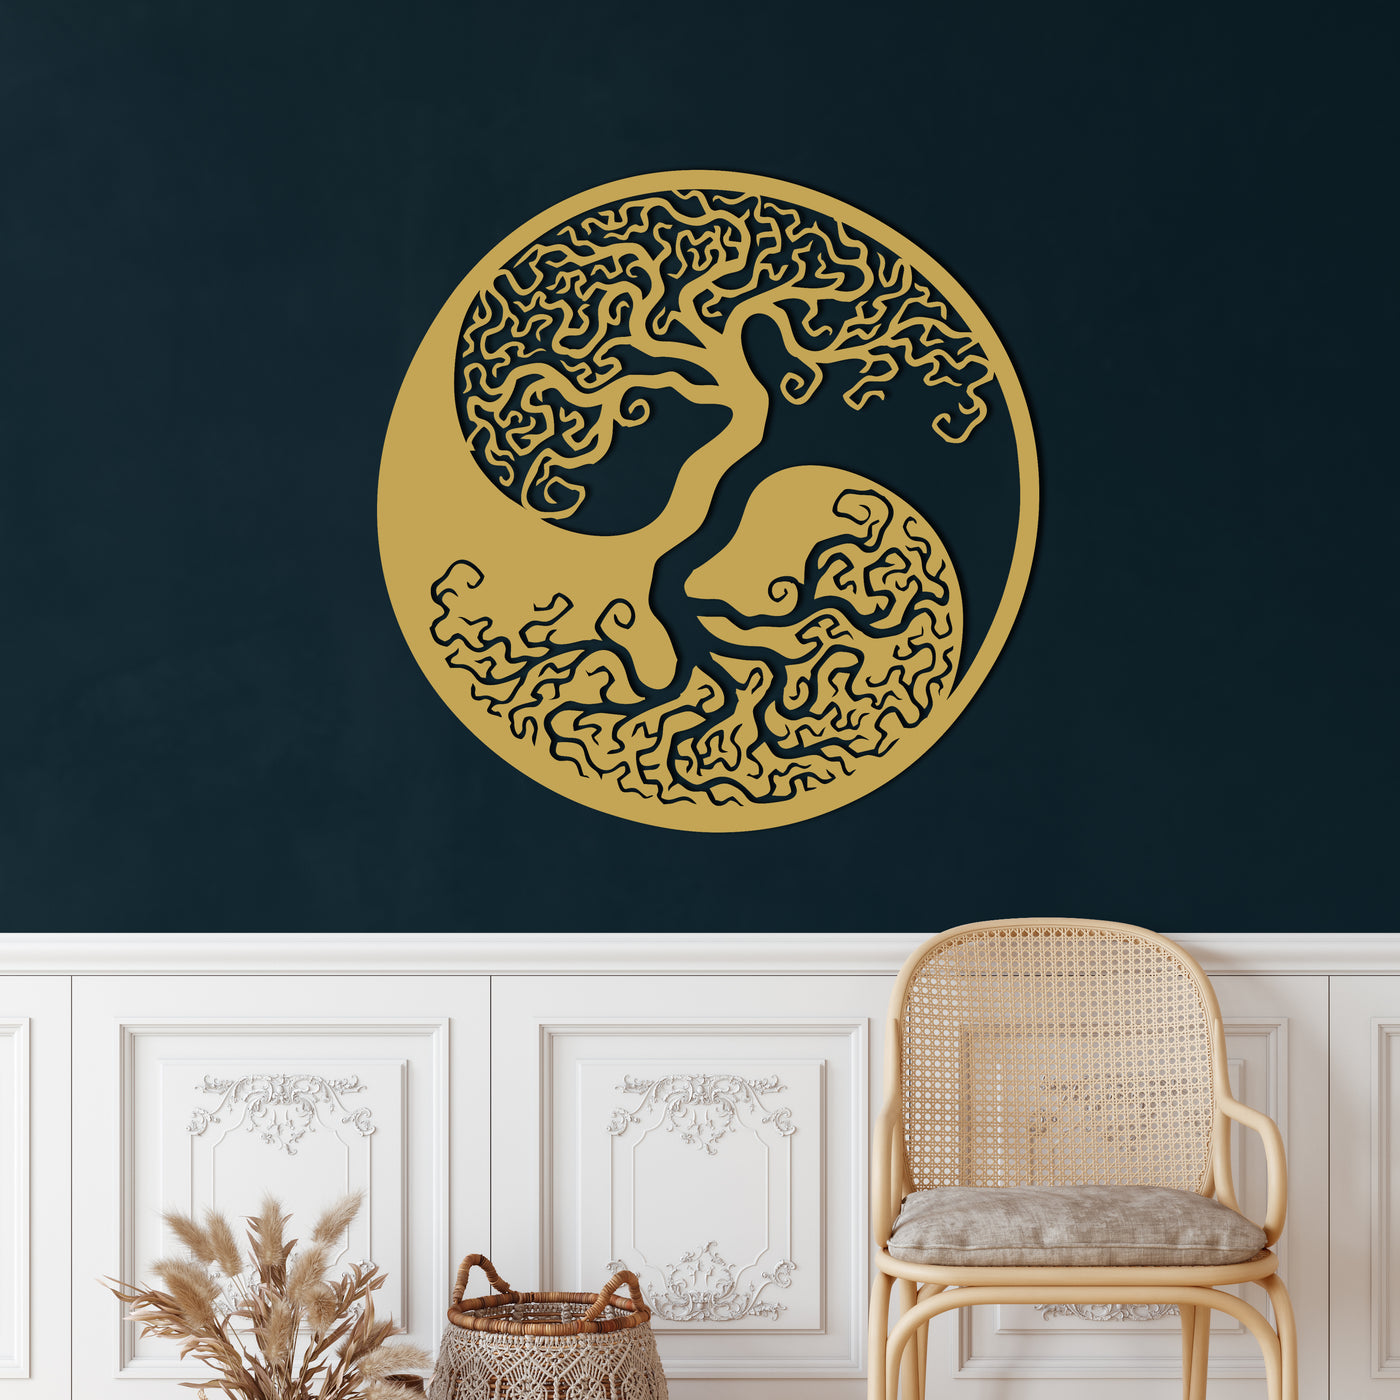 Baum des Lebens Yin Yang Metall Wandkunst